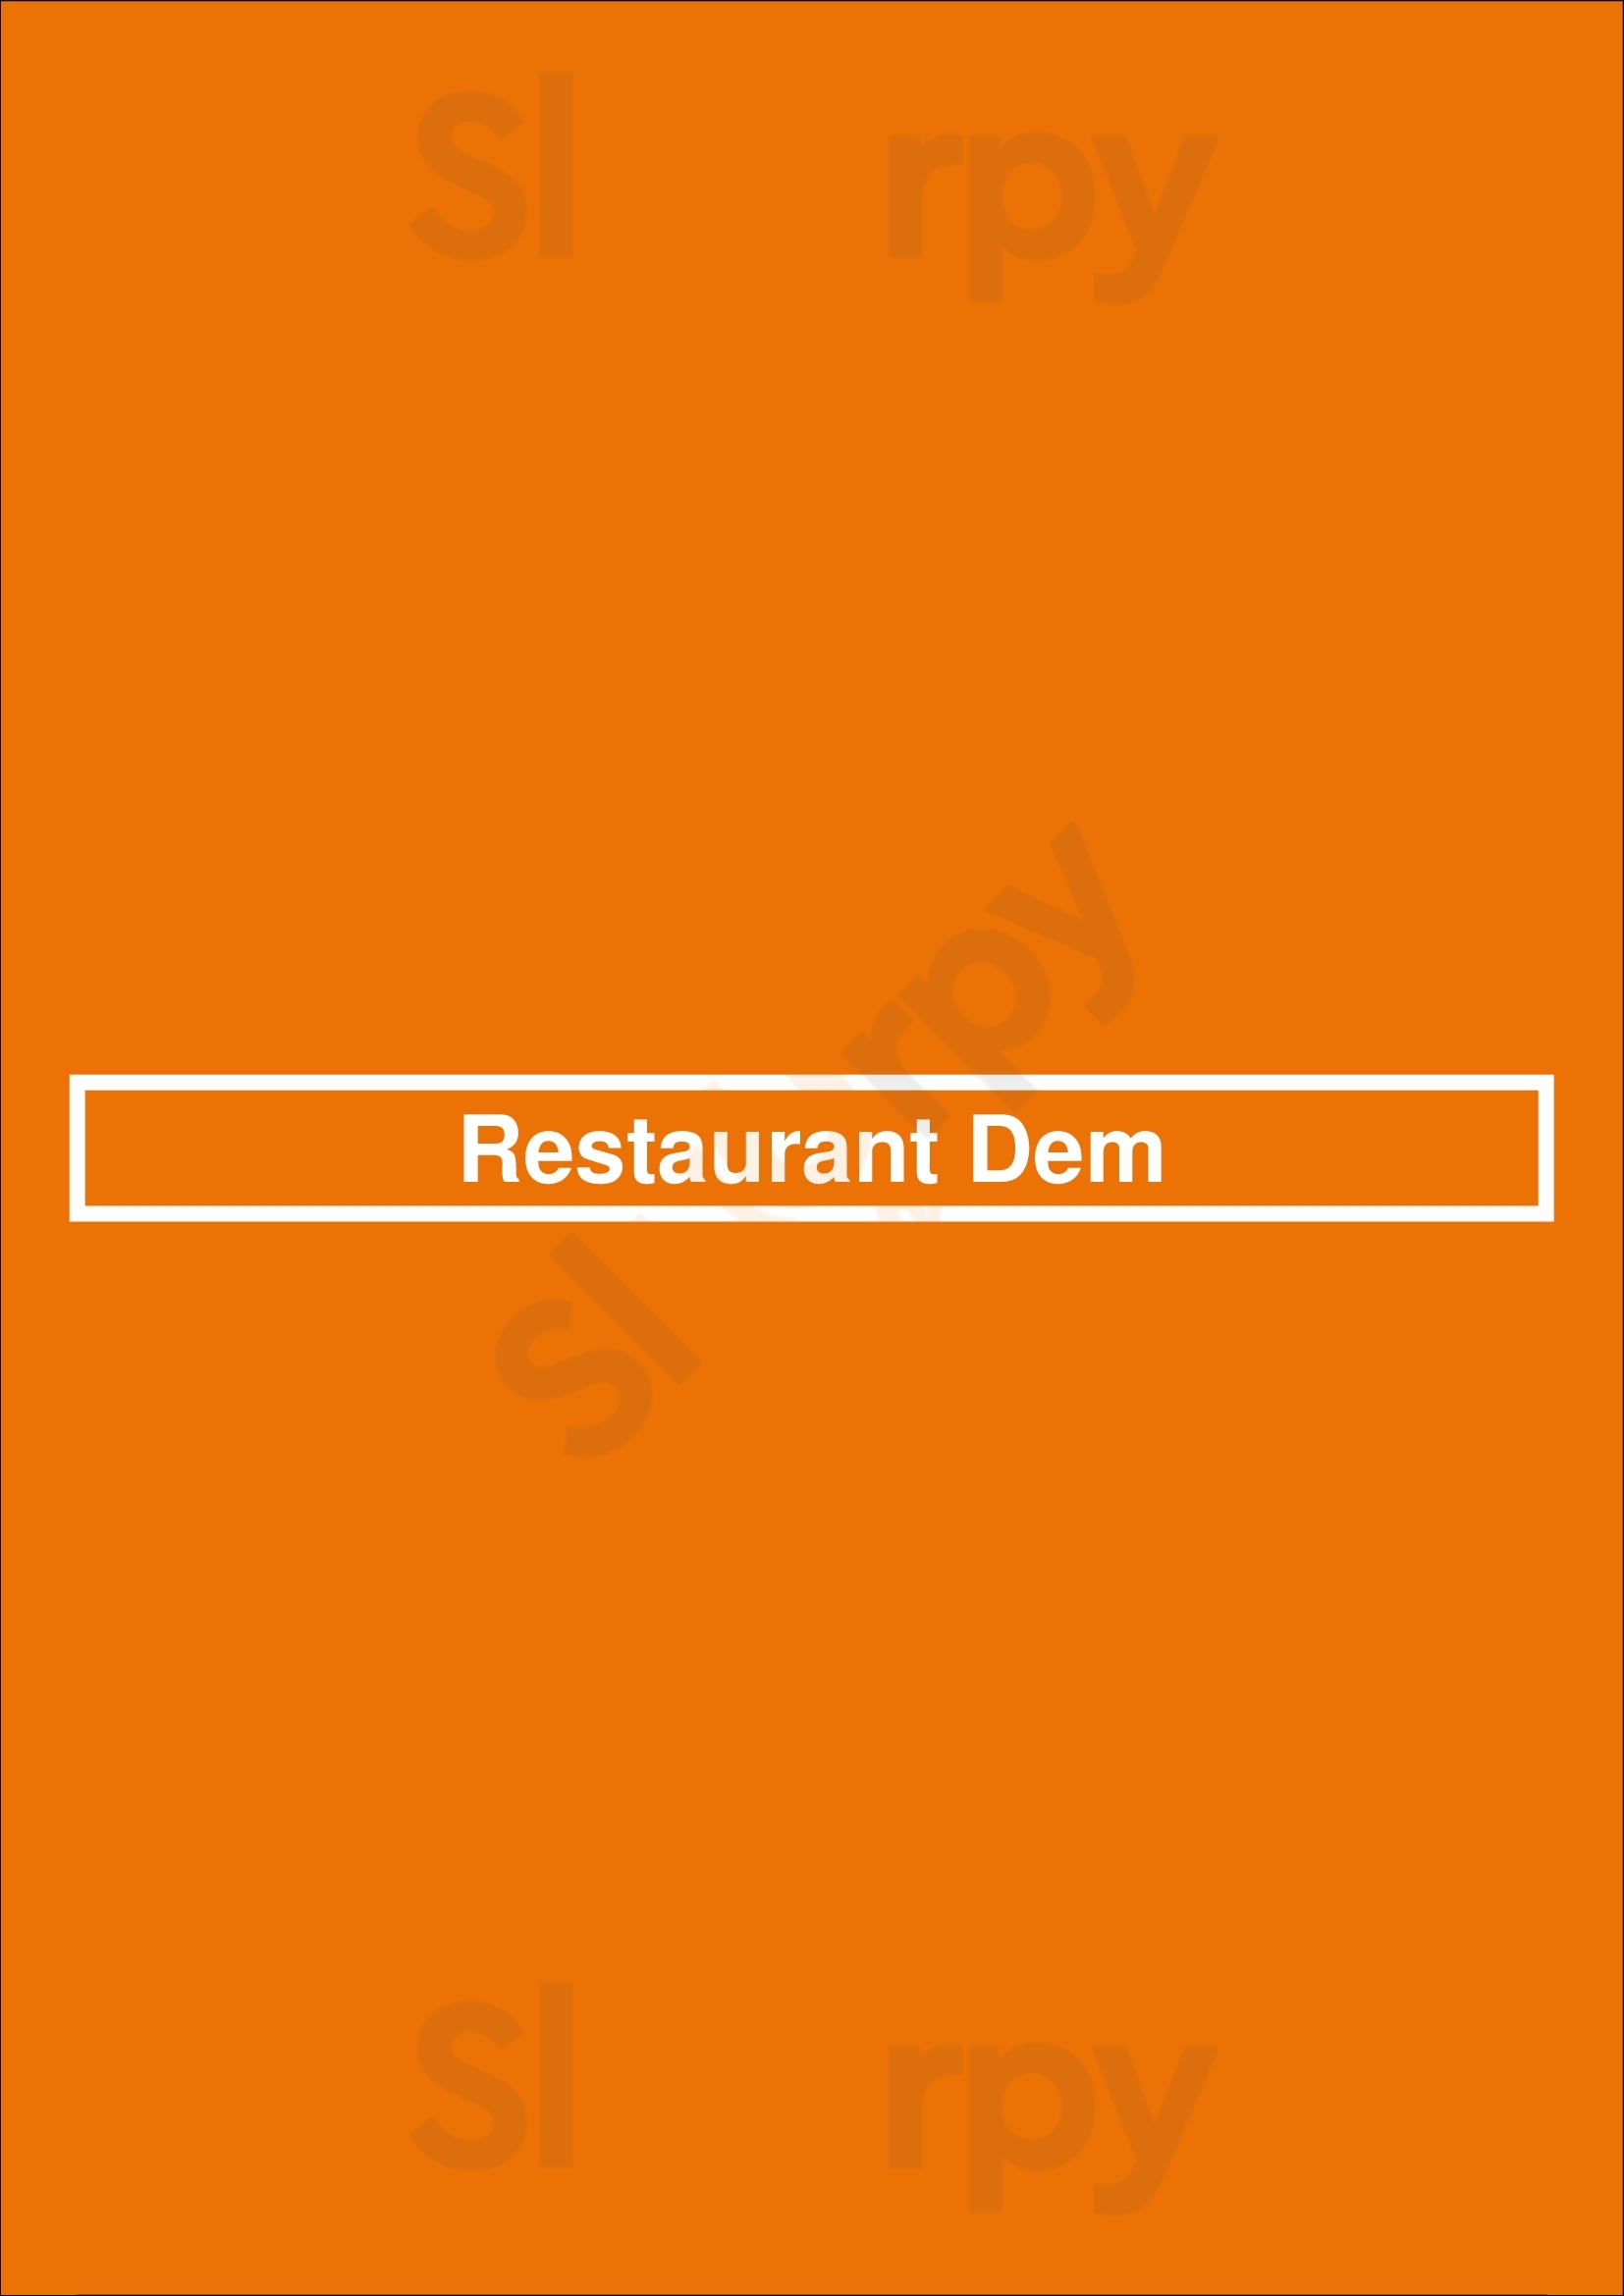 Restaurant Dem Rijswijk Menu - 1